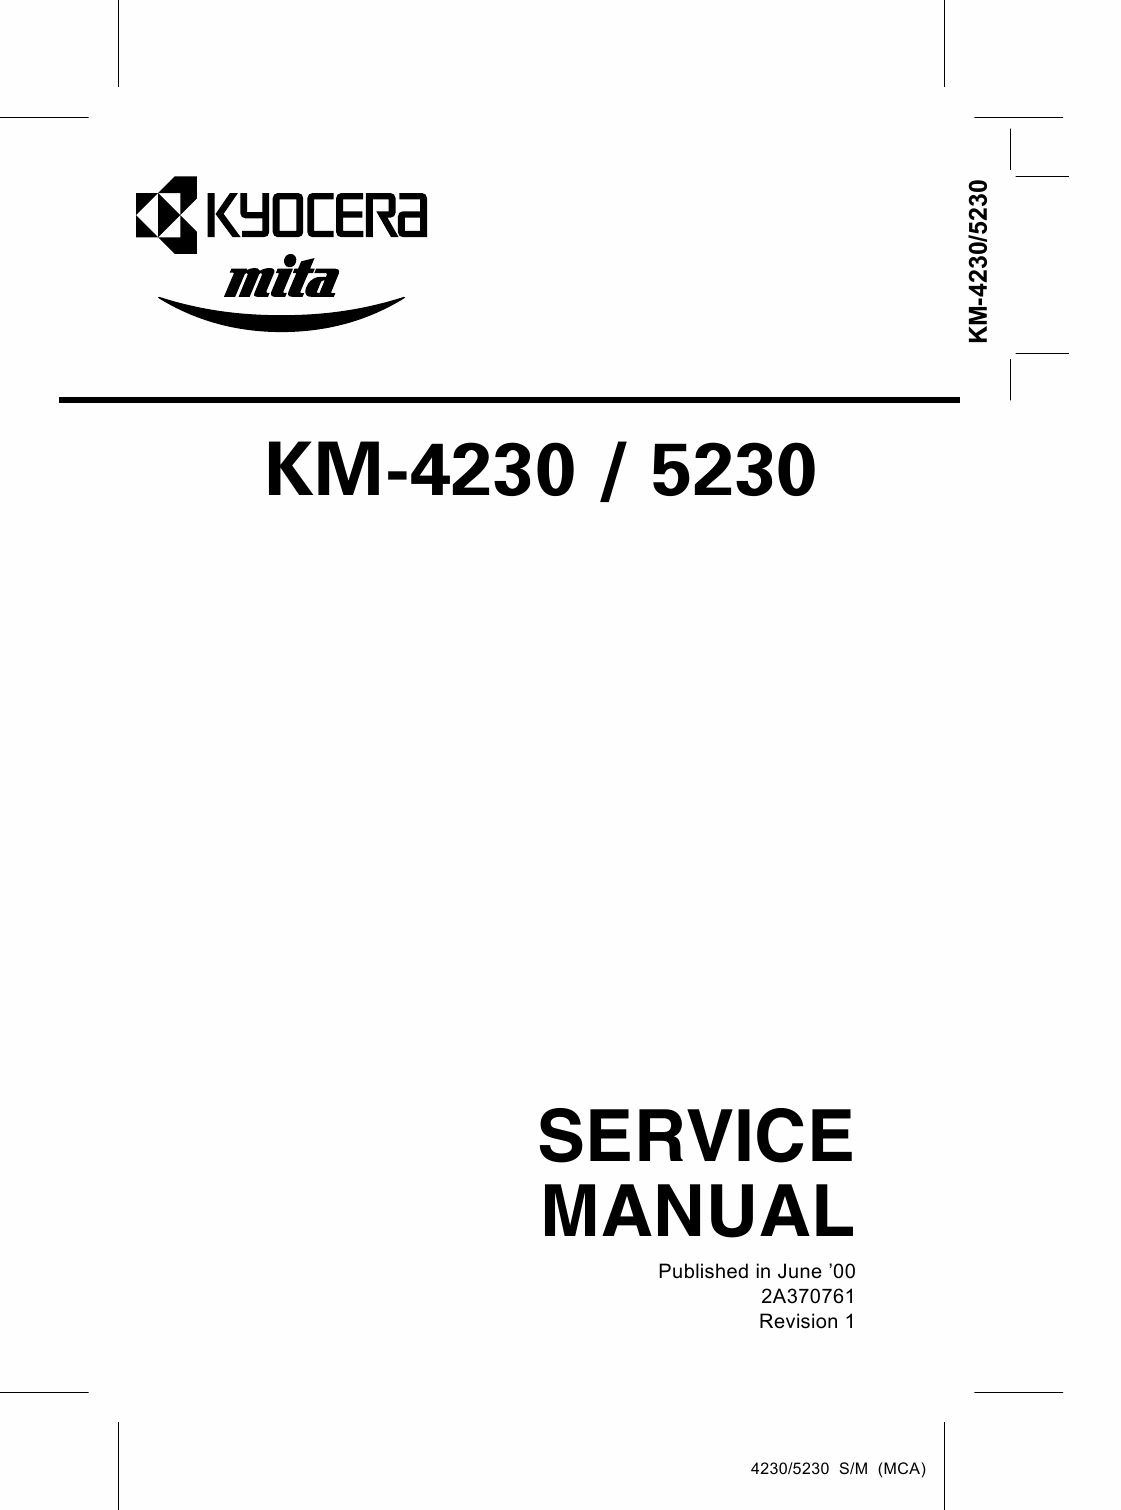 KYOCERA Copier KM-4230 5230 Parts and Service Manual-1